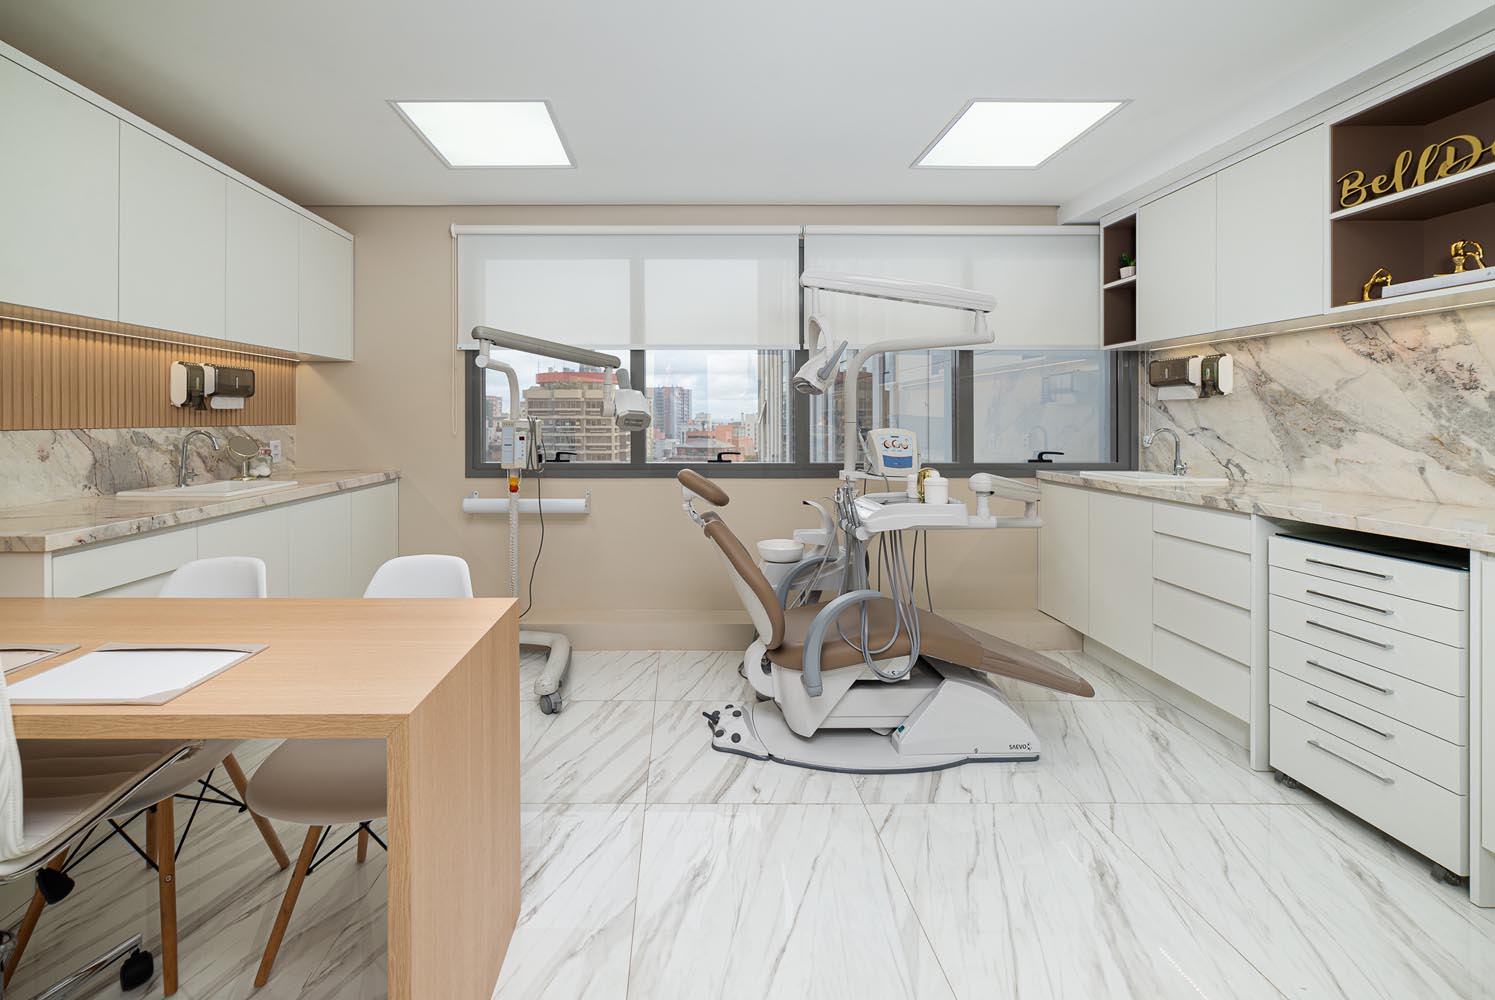 Consultório Odontológico - LYNX Arquitetura